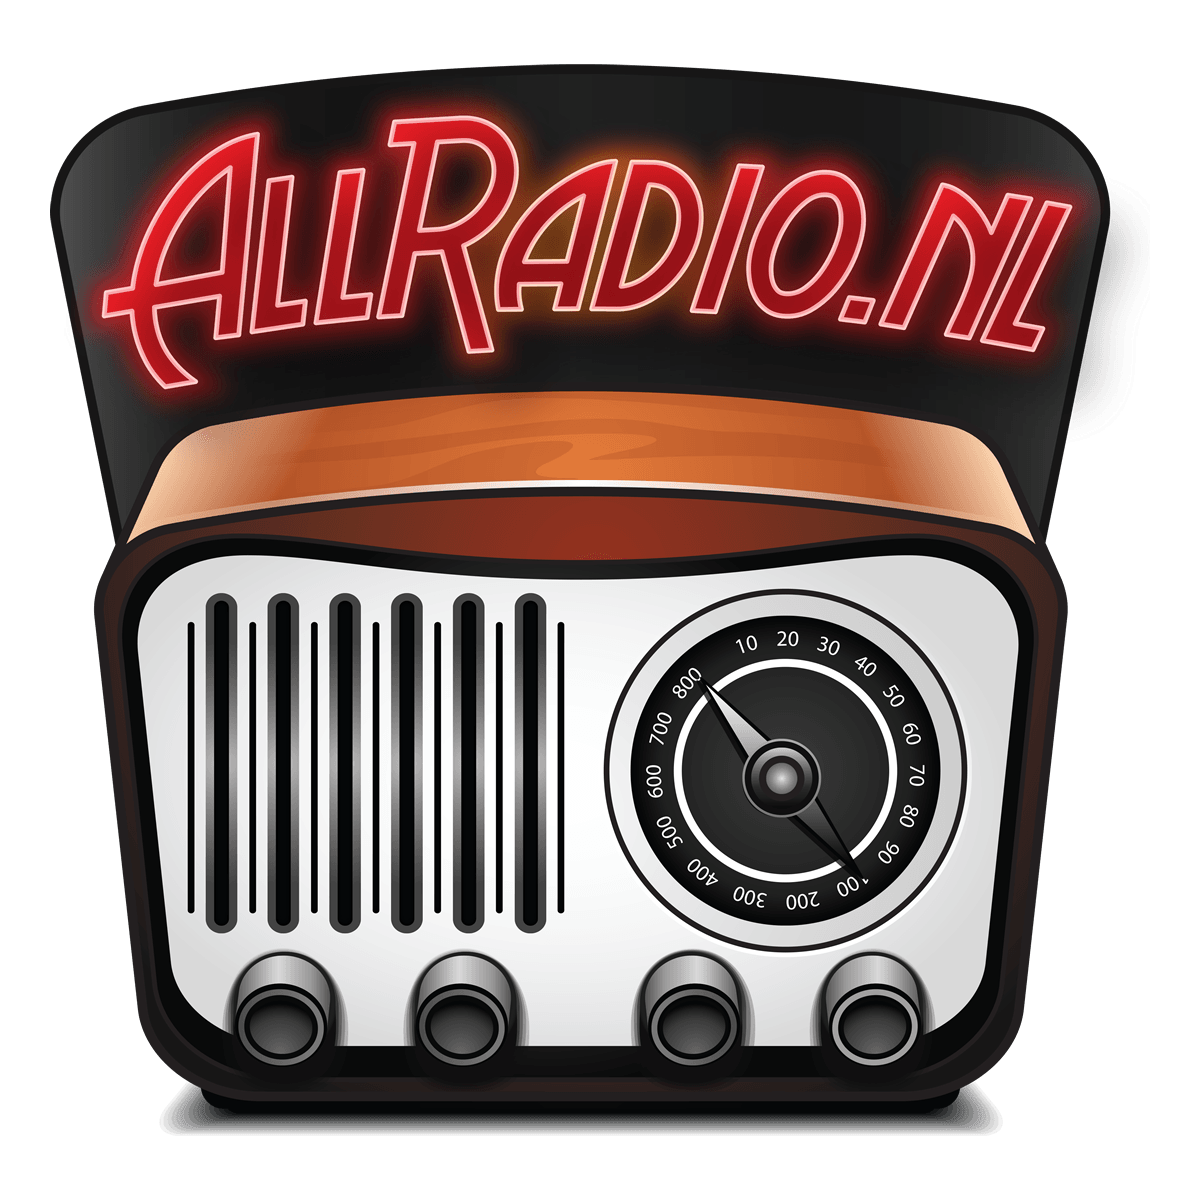 All radio